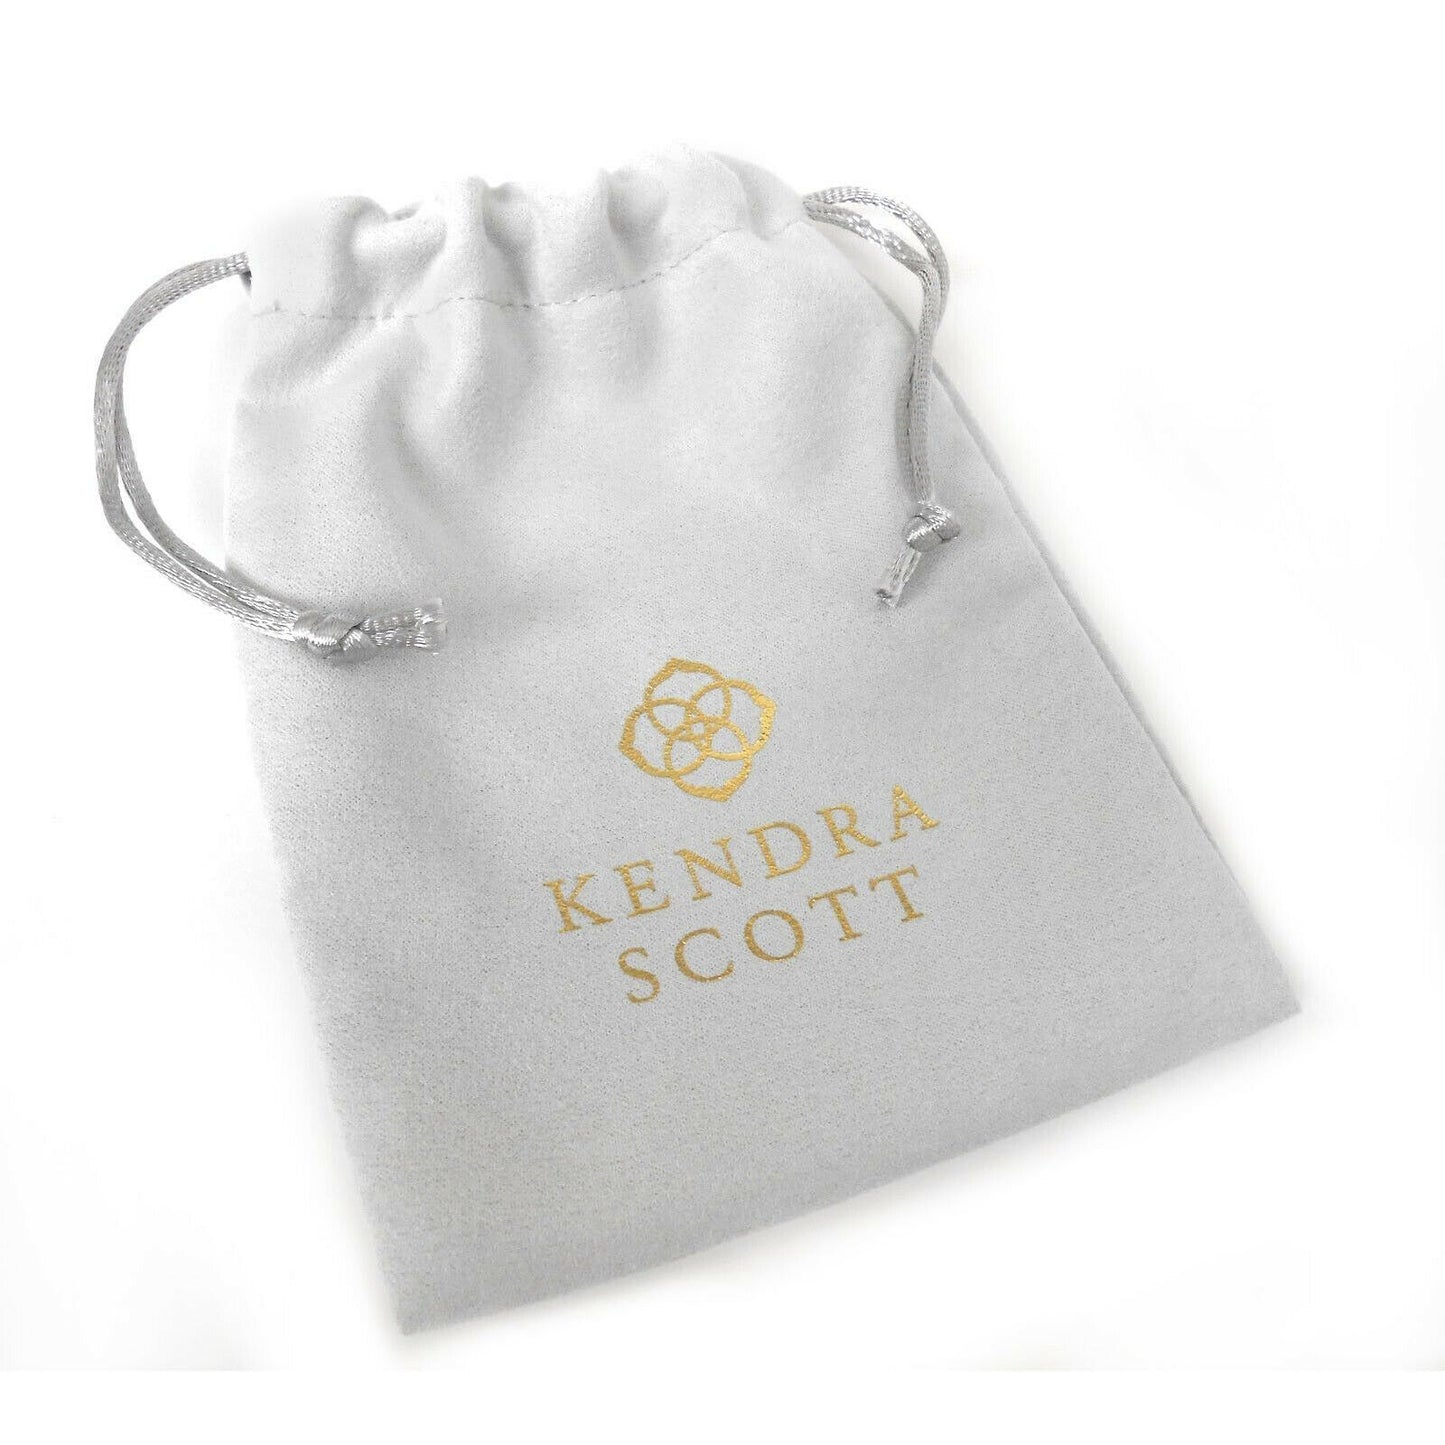 Kendra Scott Margot Hoop Lilac Abalone Gold Drop Dangle Earrings NWT